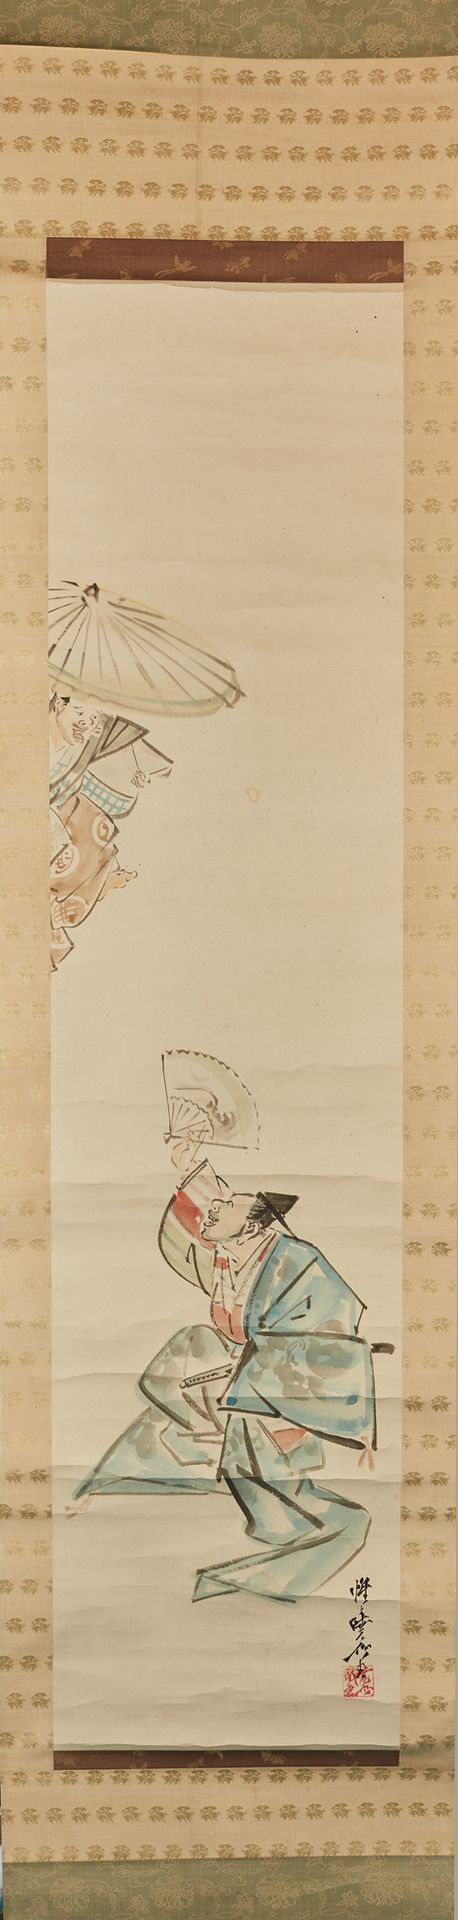 Kawanabe Kyosai (1831-1889) 纸上多色墨水，两个舞者。(污点、褶皱)。
签署了京赛。
尺寸118 x 28厘米。
被装在一个kakem&hellip;